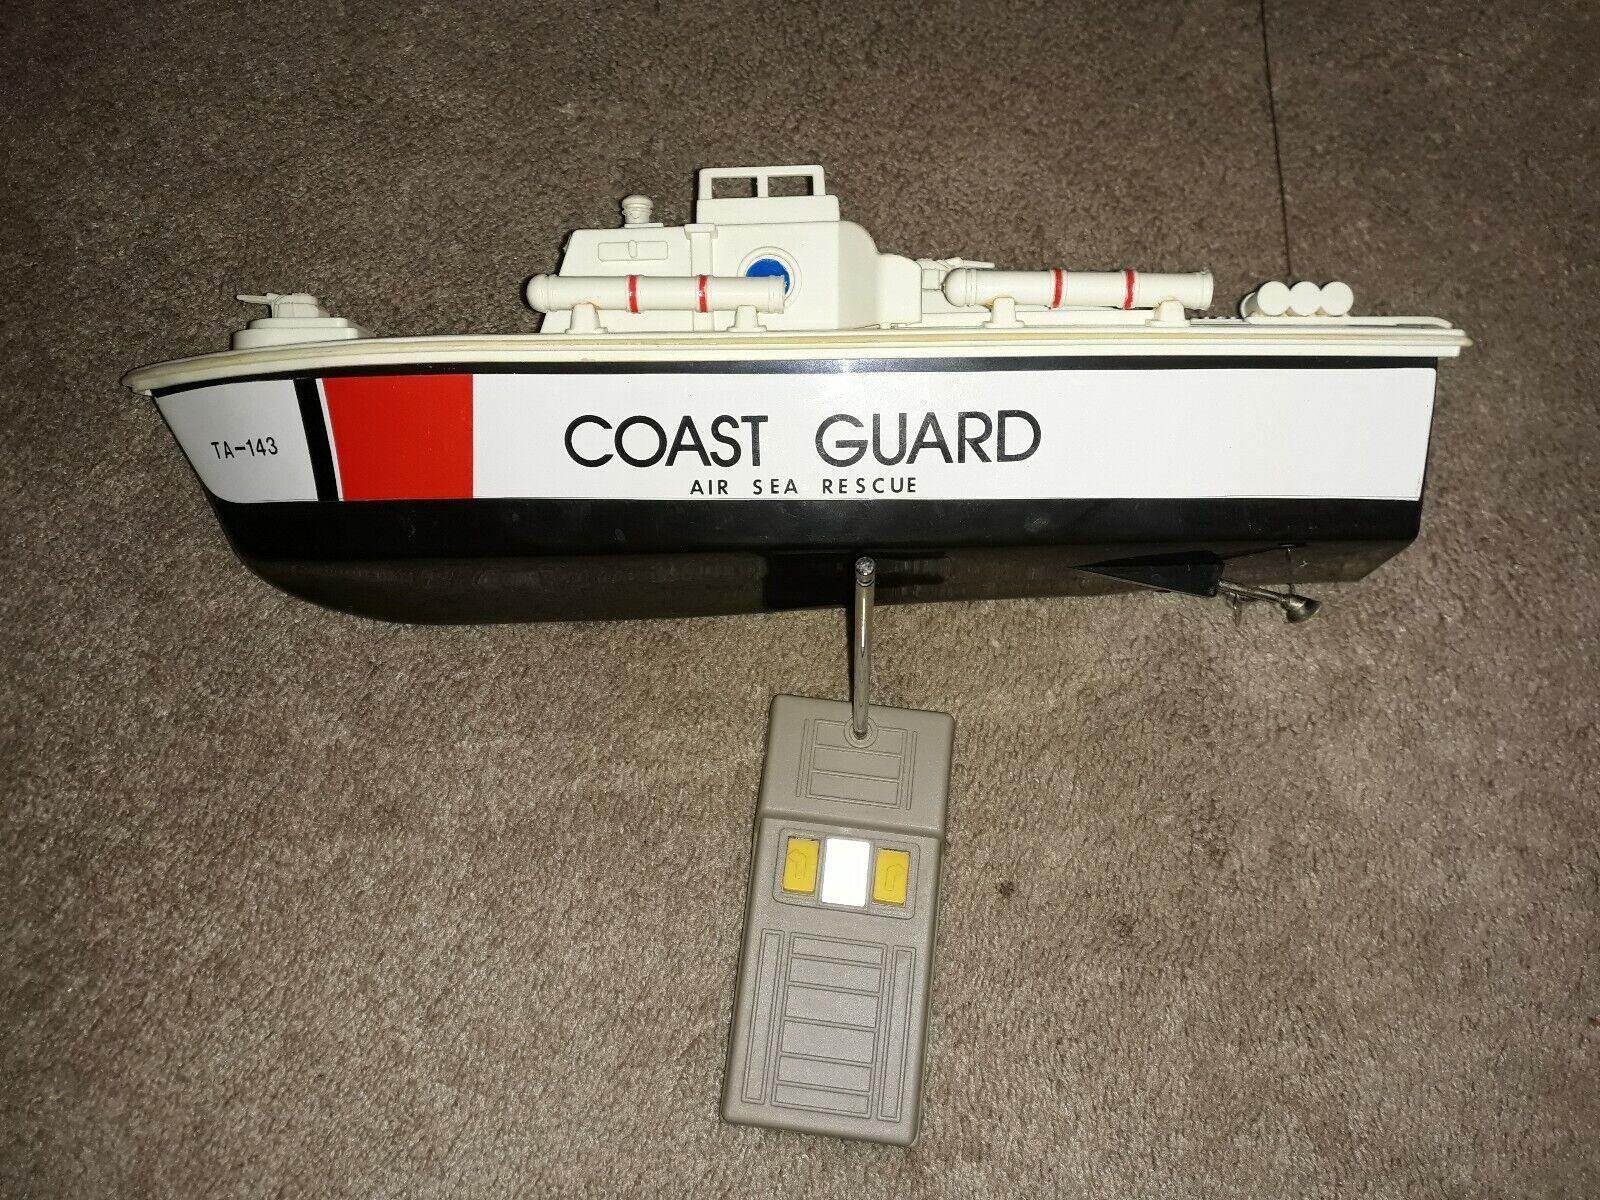 Remote Control Coast Guard Cutter: Applications of Remote Control Coast Guard Cutters